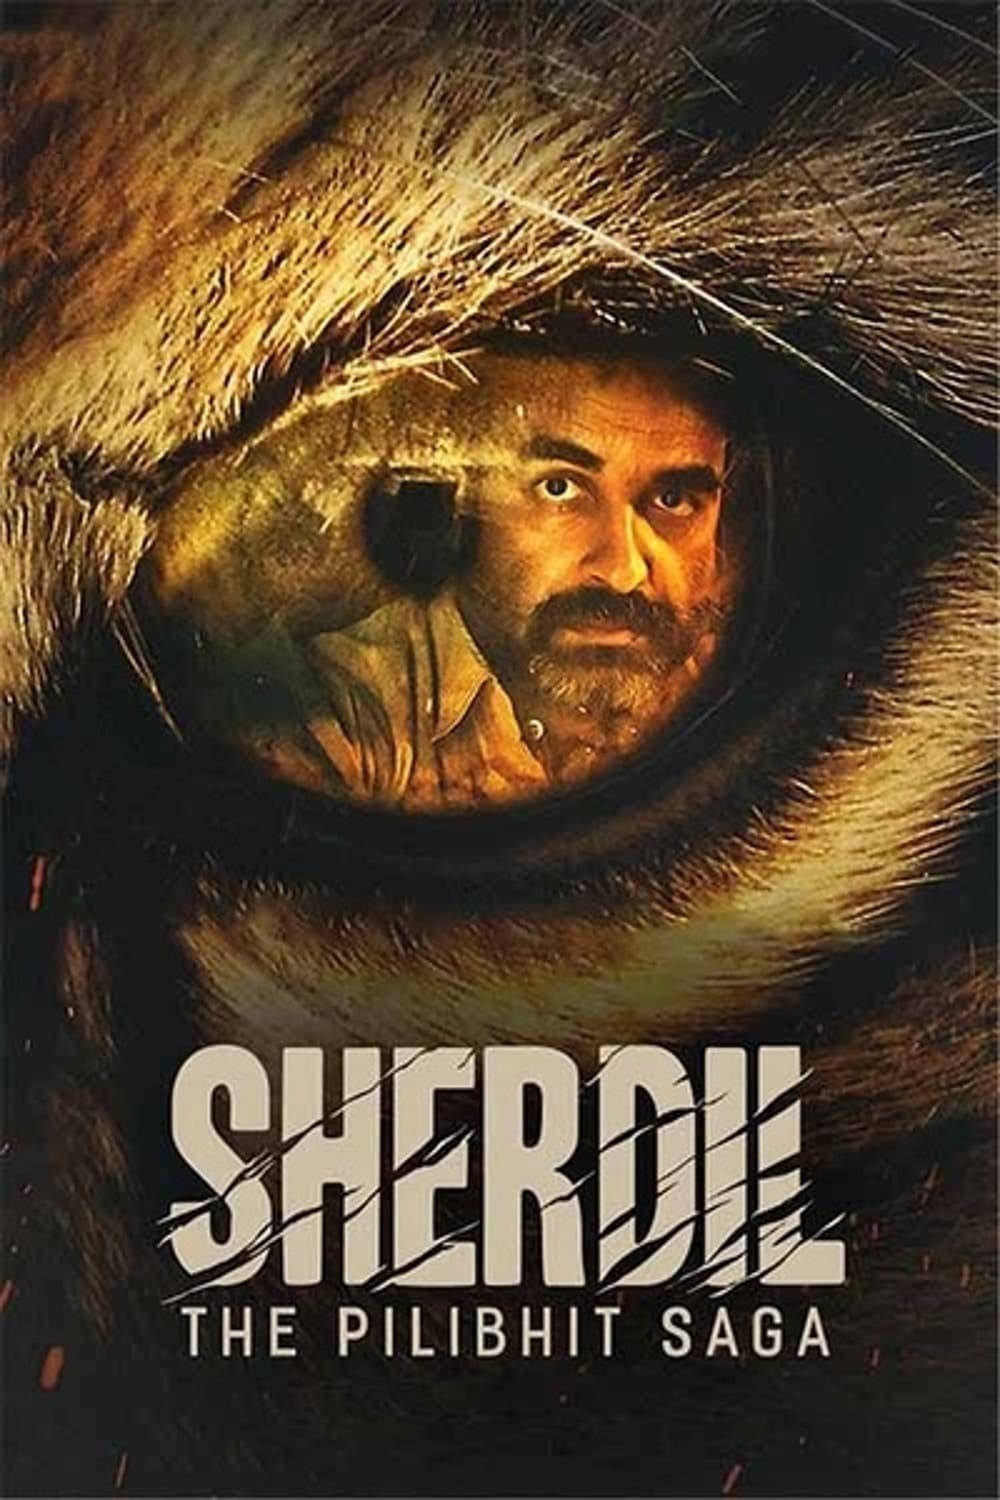 Poster for the movie "Sherdil: The Pilibhit Saga"